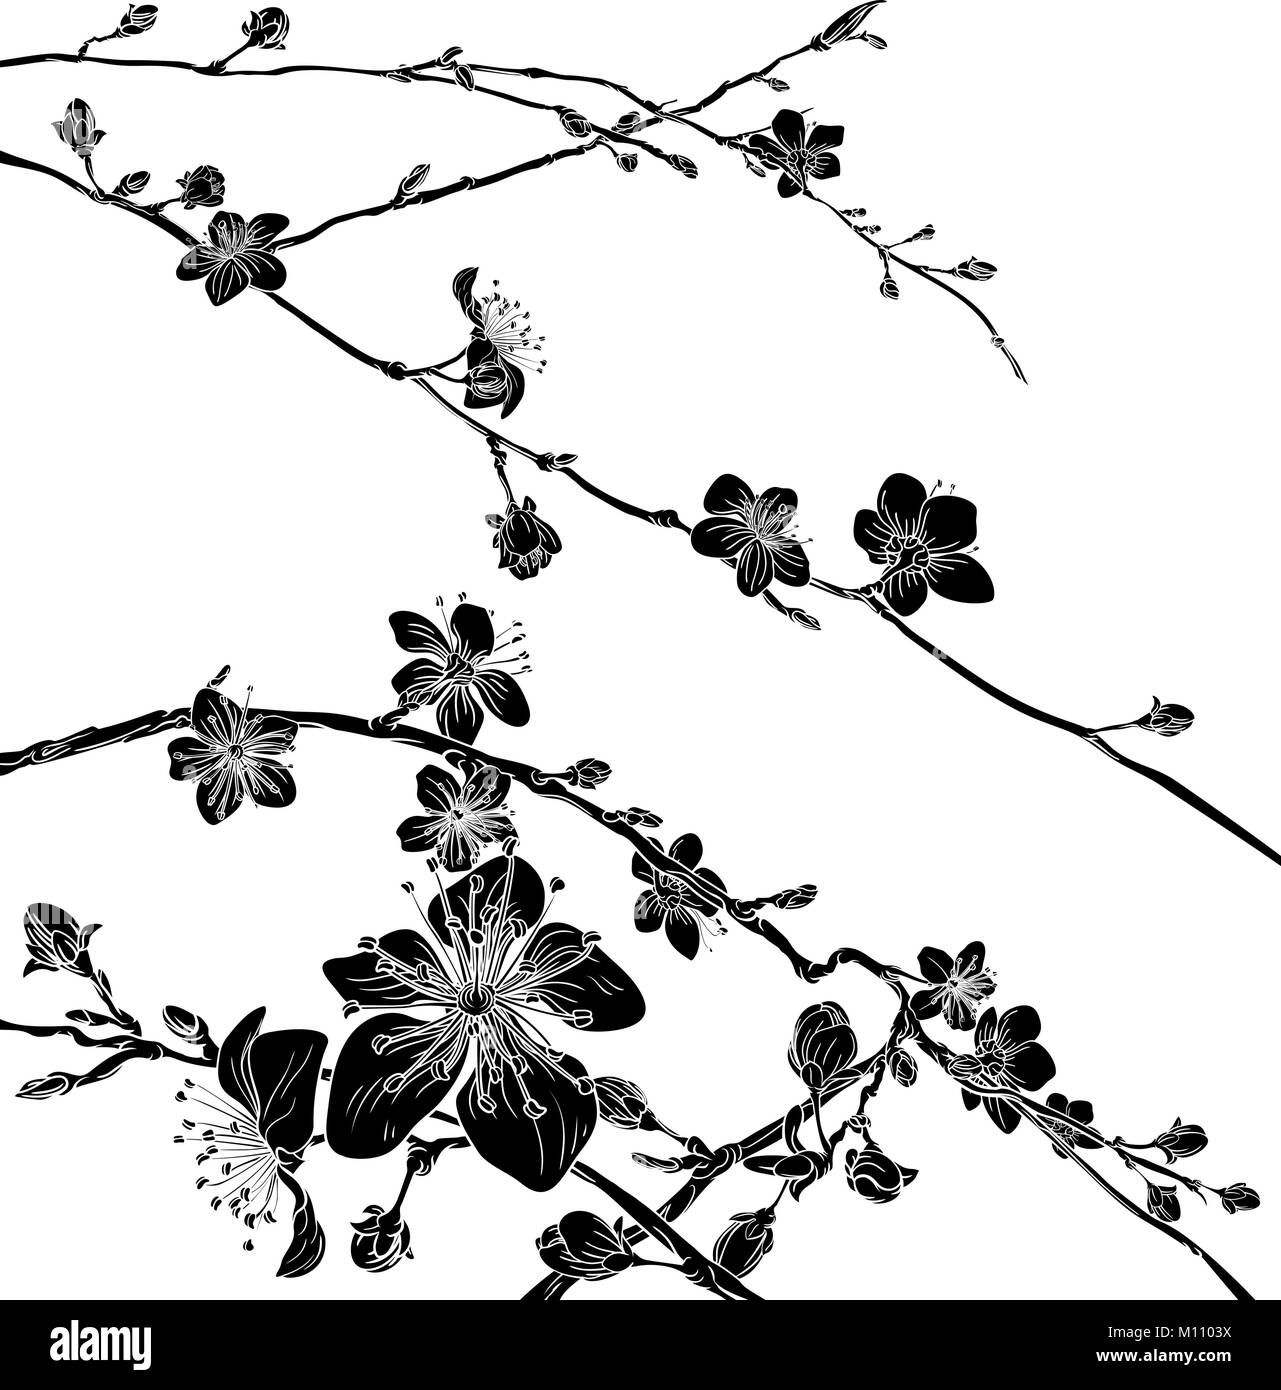 Flores chinas Imágenes recortadas de stock - Alamy